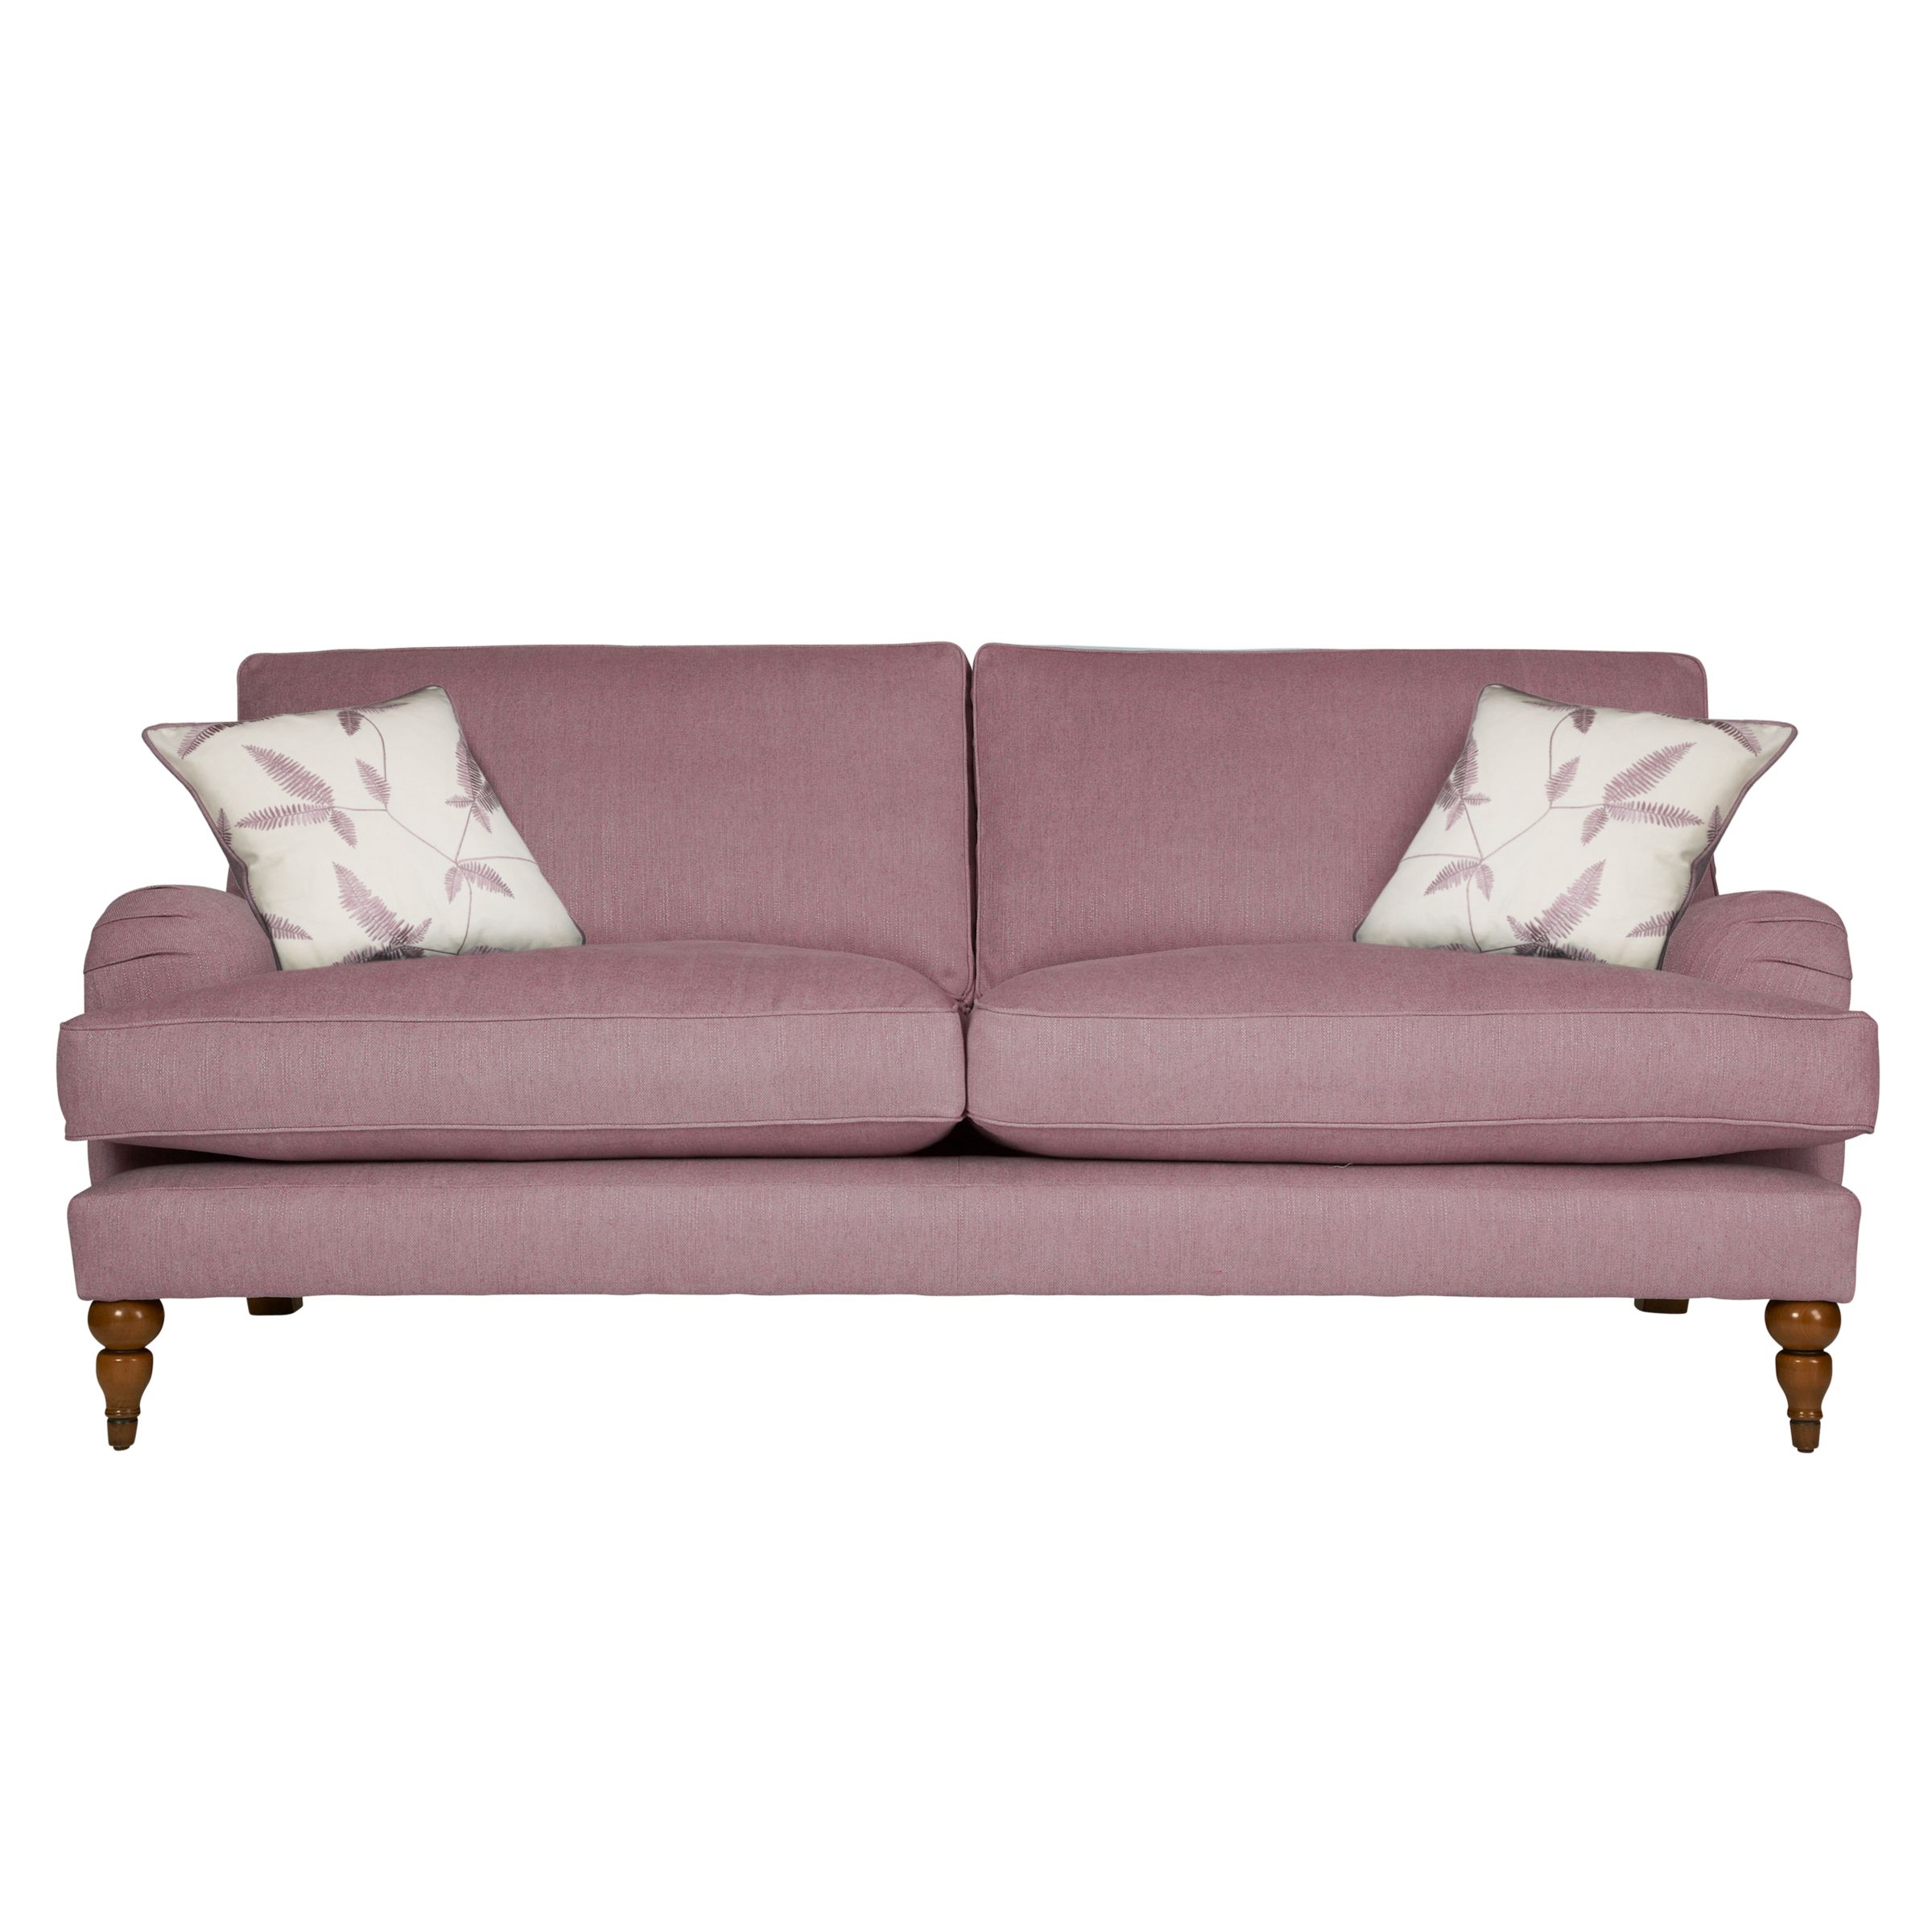 John Lewis Penryn Large Sofa, Heather / Elna, width 202cm